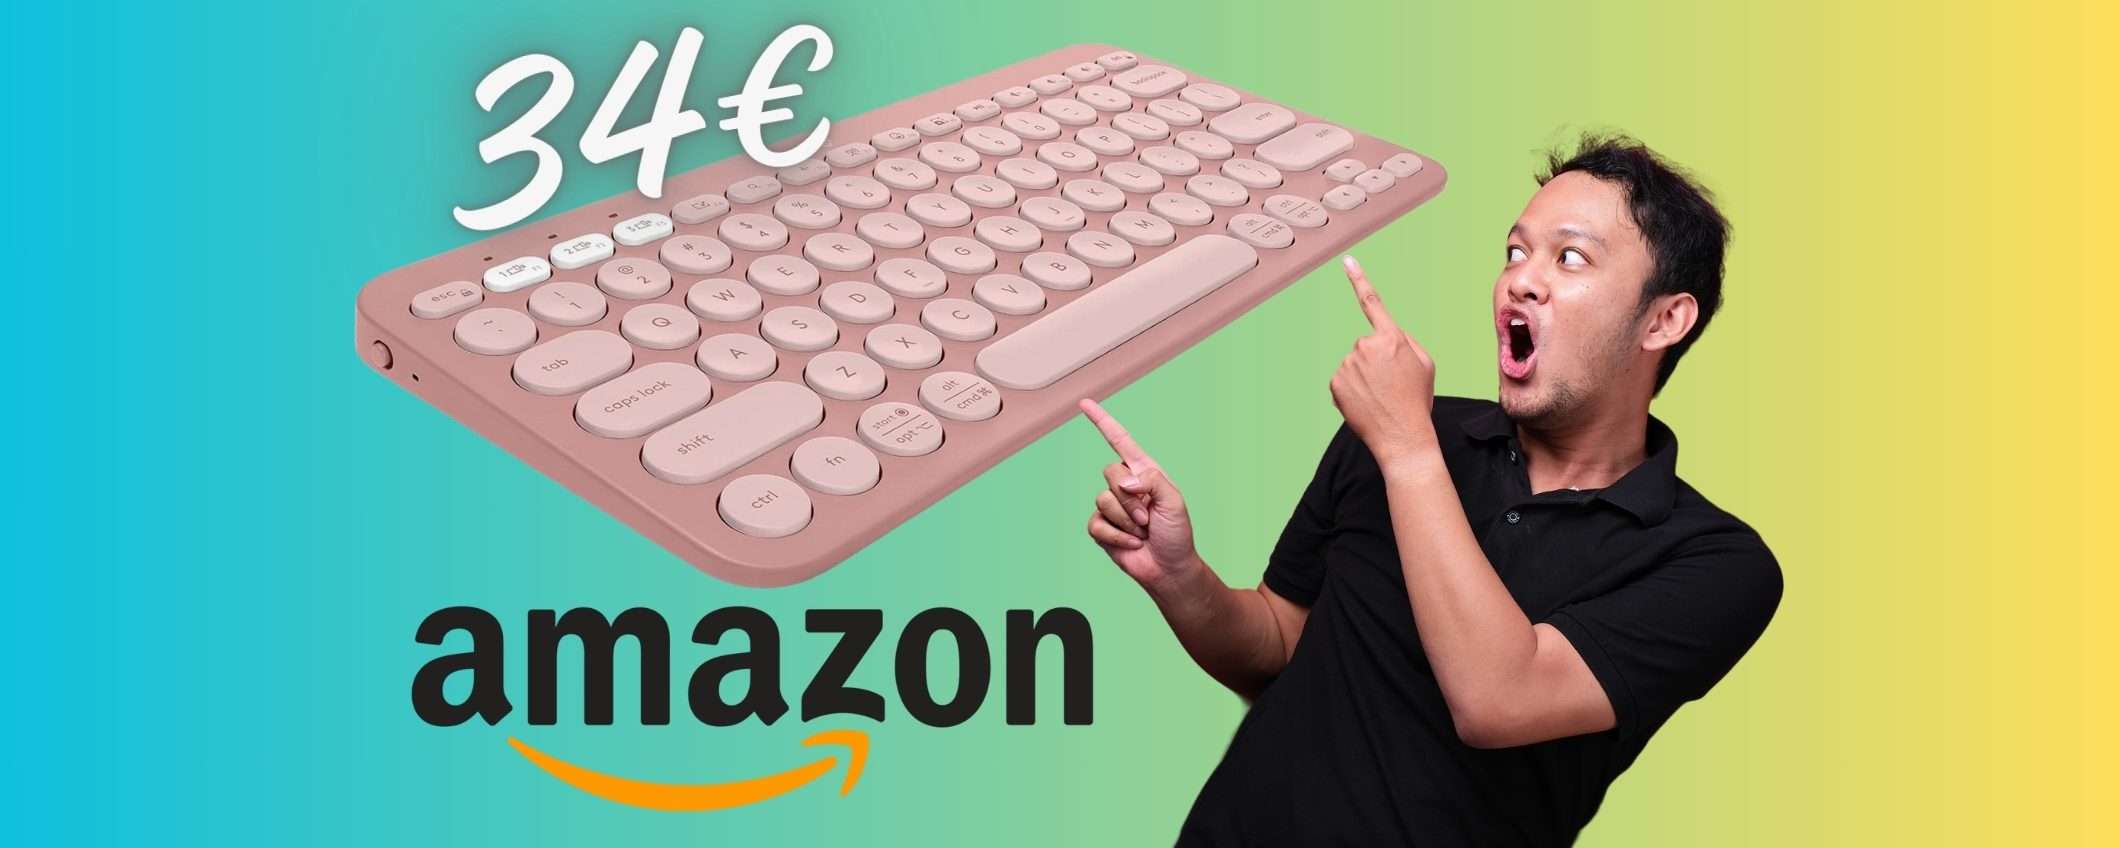 Logitech Pebble Keys 2: tastiera wireless con tasti ergonomici (34€)